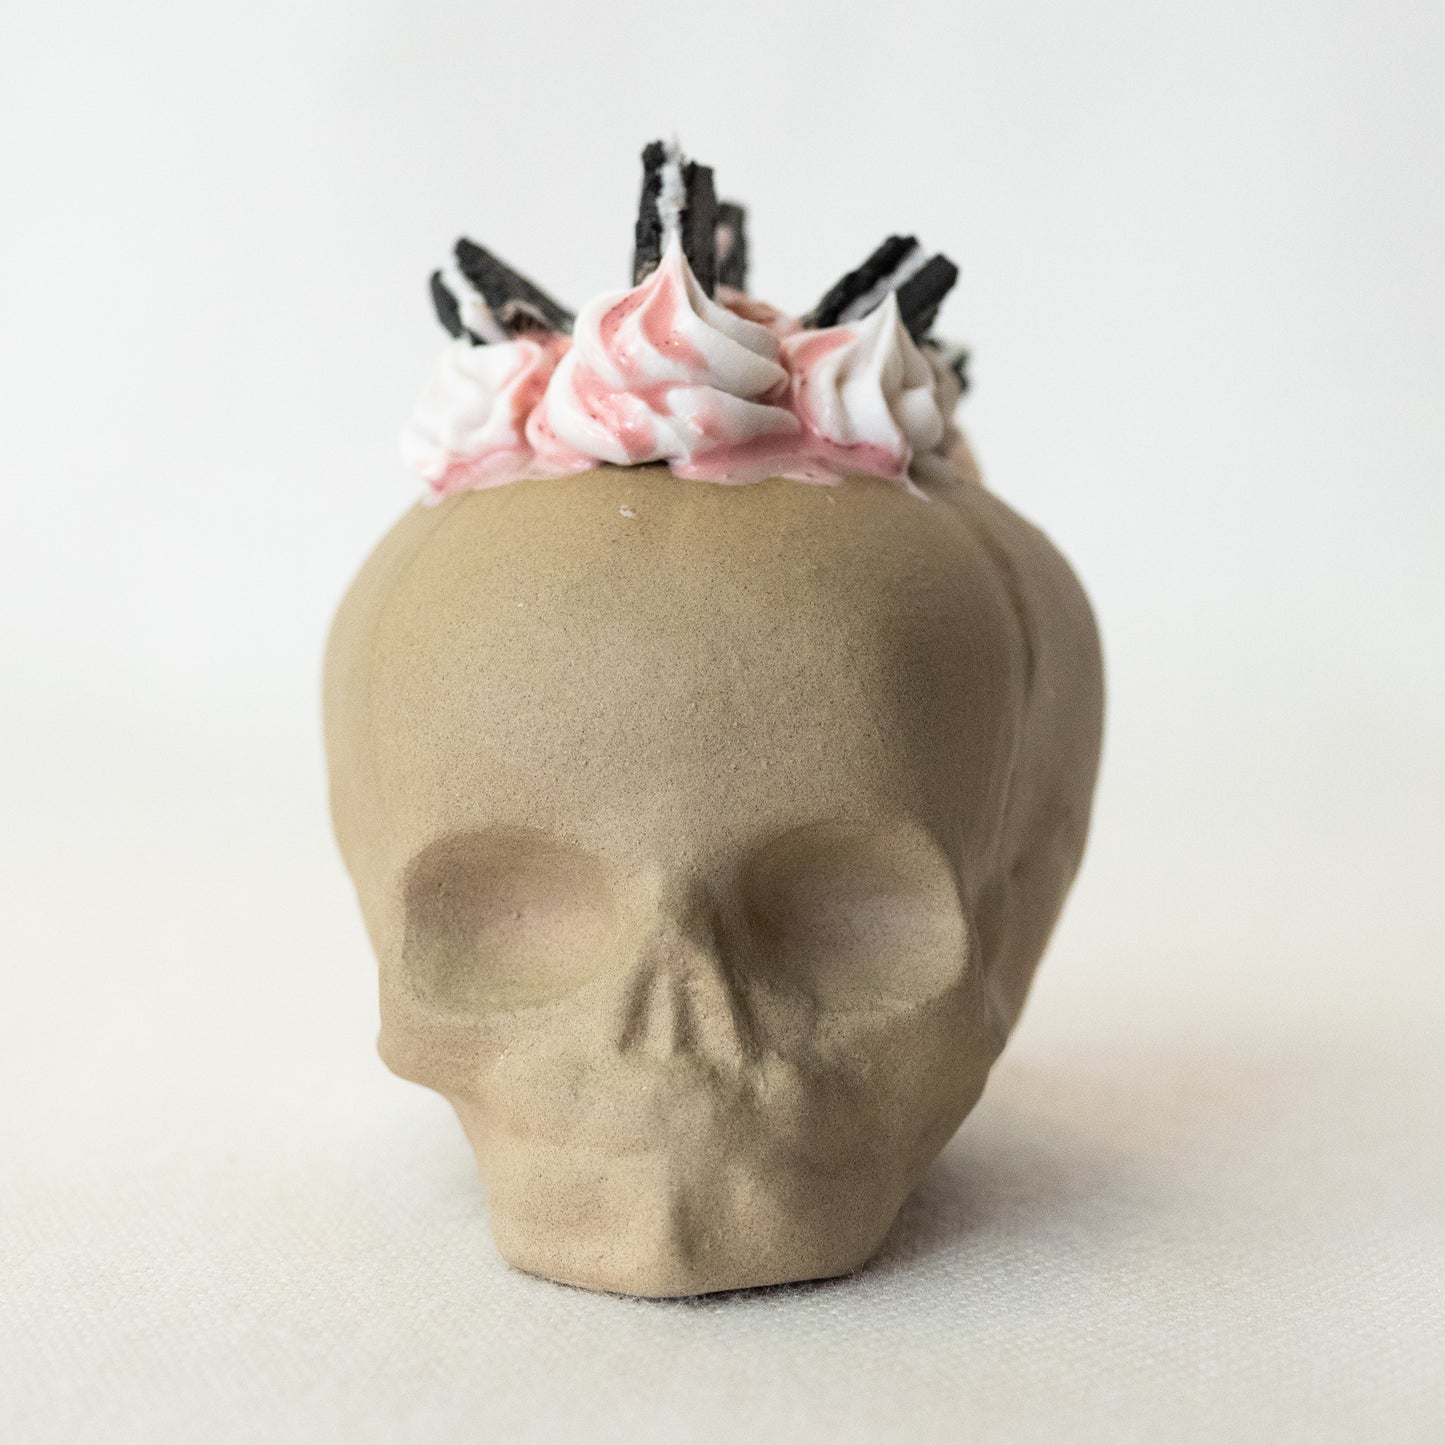 Ceramic Cookies and Cream Strawberry Mohawk Skull (Large)